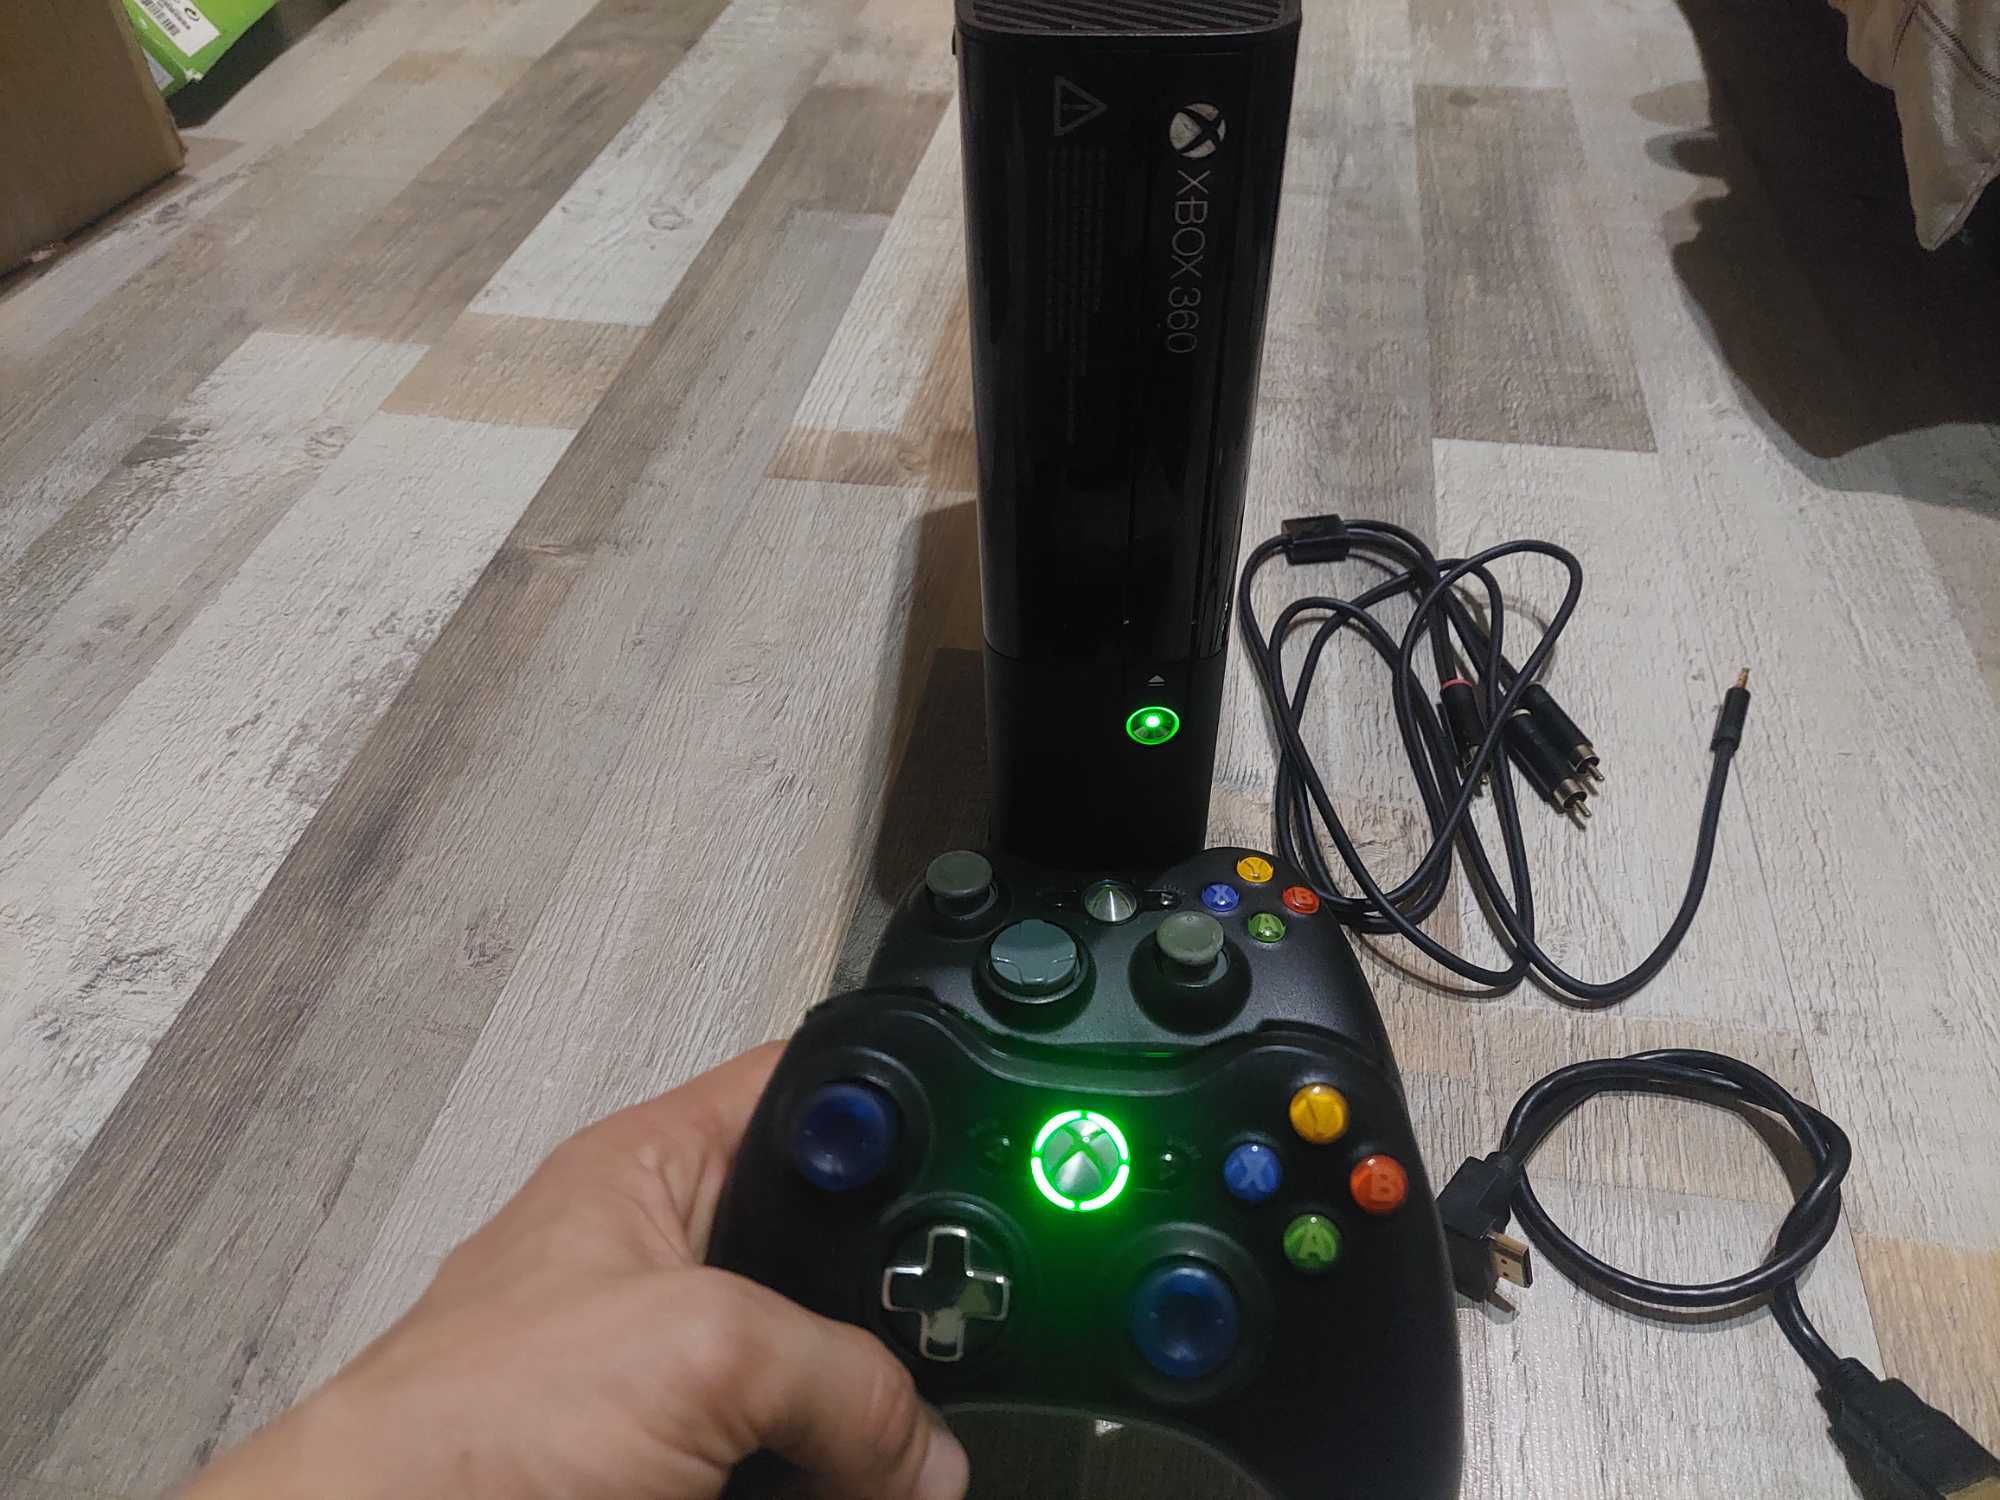 Xbox  360 Controller  geympad  Joystick  ікс бокс геймпад в ідеалі